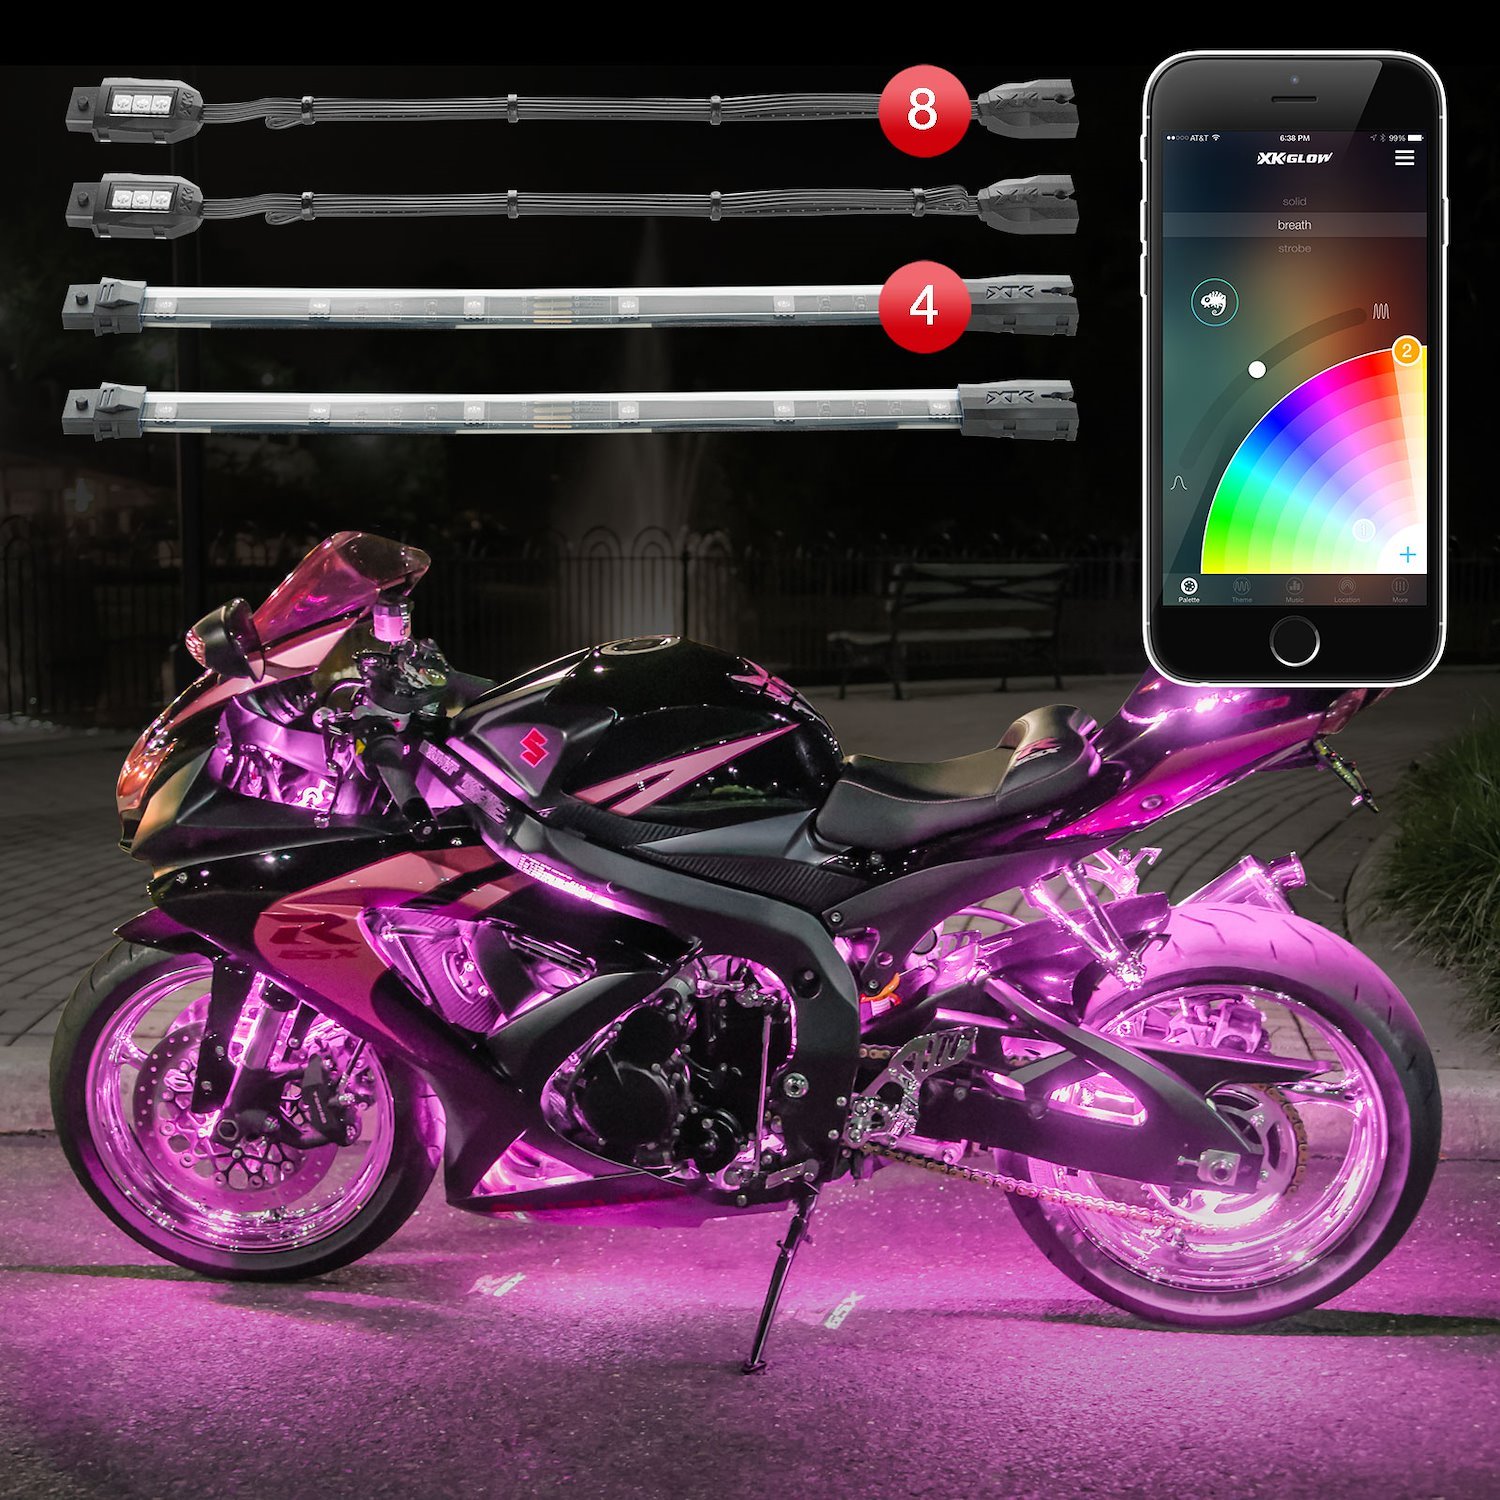 KS-MOTO-STANDARD 8 x Pod + 4 x 10 in. Strip Million Color XKCHROME ATV/Motorcycle LED Light Kit, Universal Fit